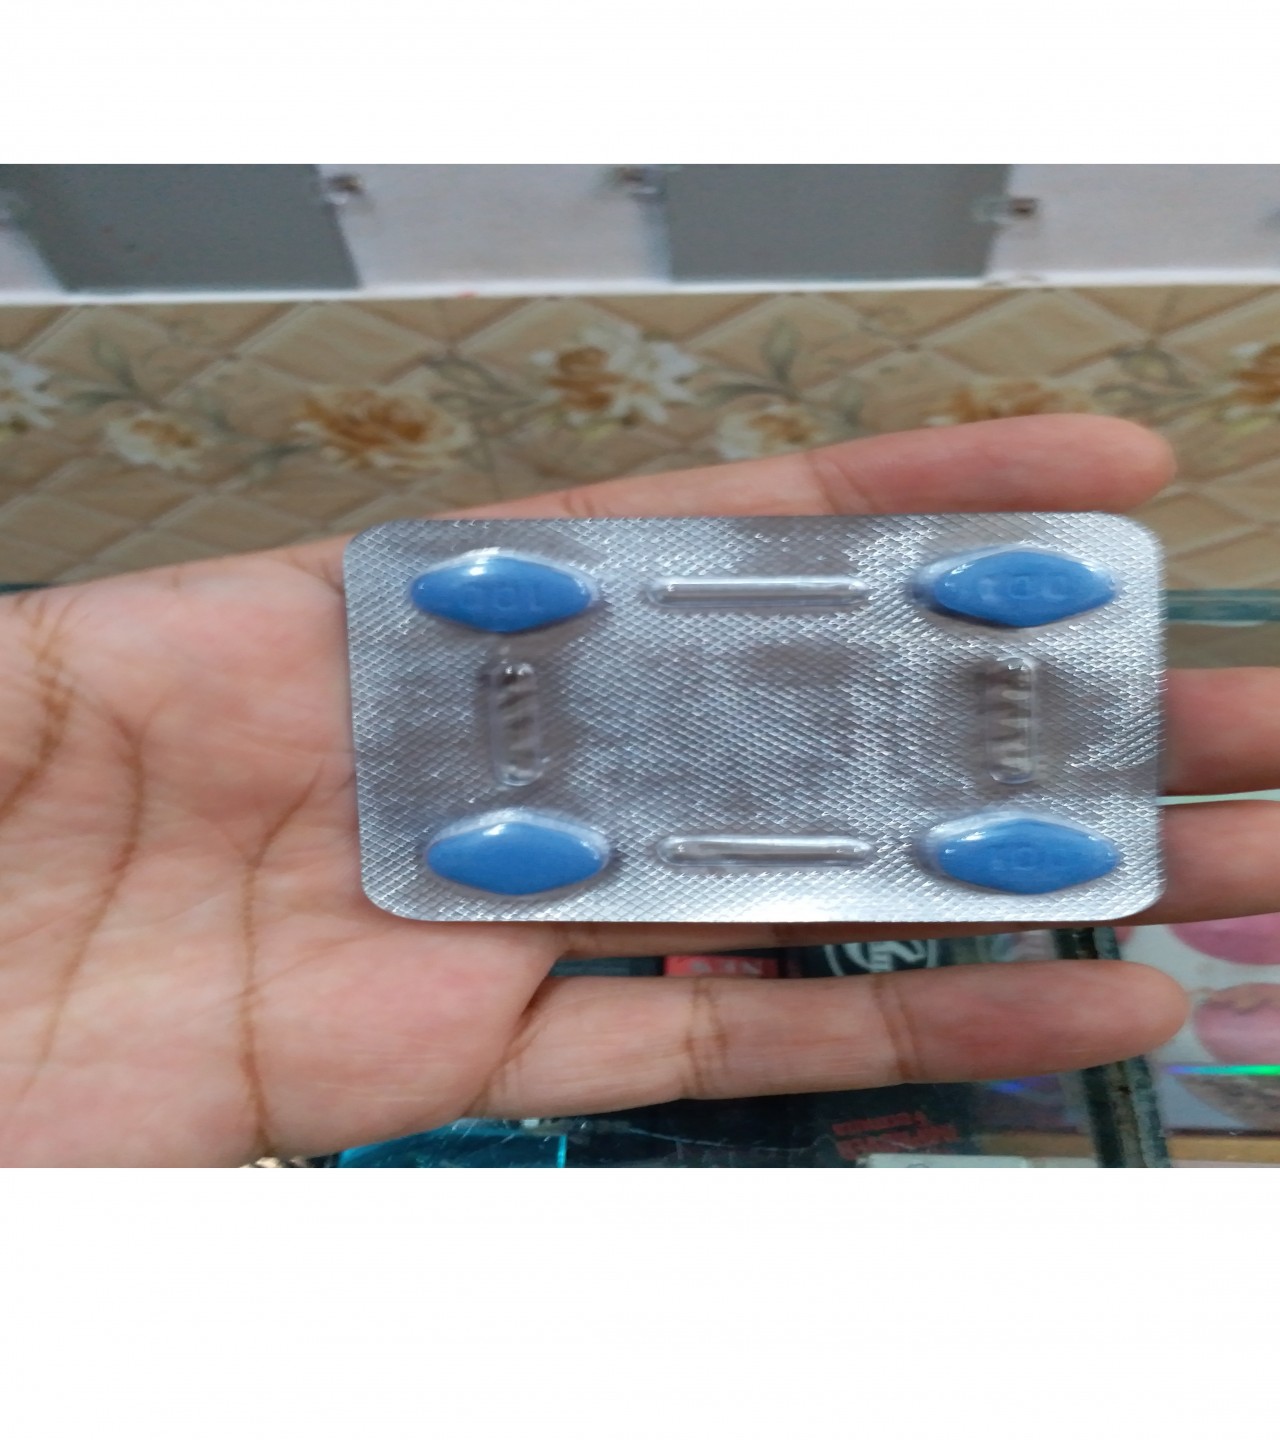 Original VEGA 100mg RX Sildenafil Citrate 4 Tablets Strip Made In India